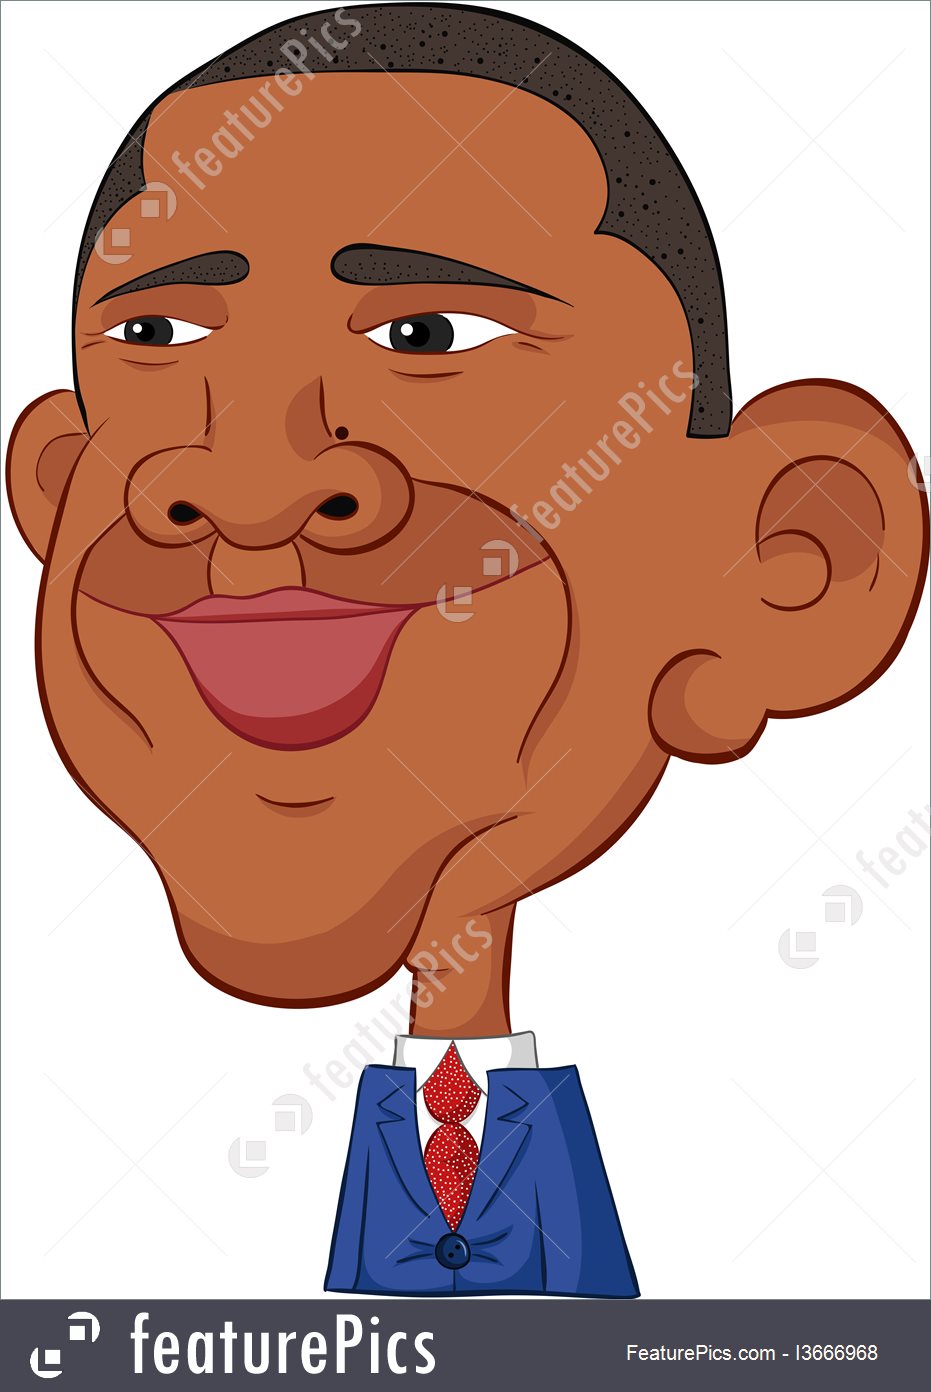 Barack Obama Caricature - Barack Obama Clipart